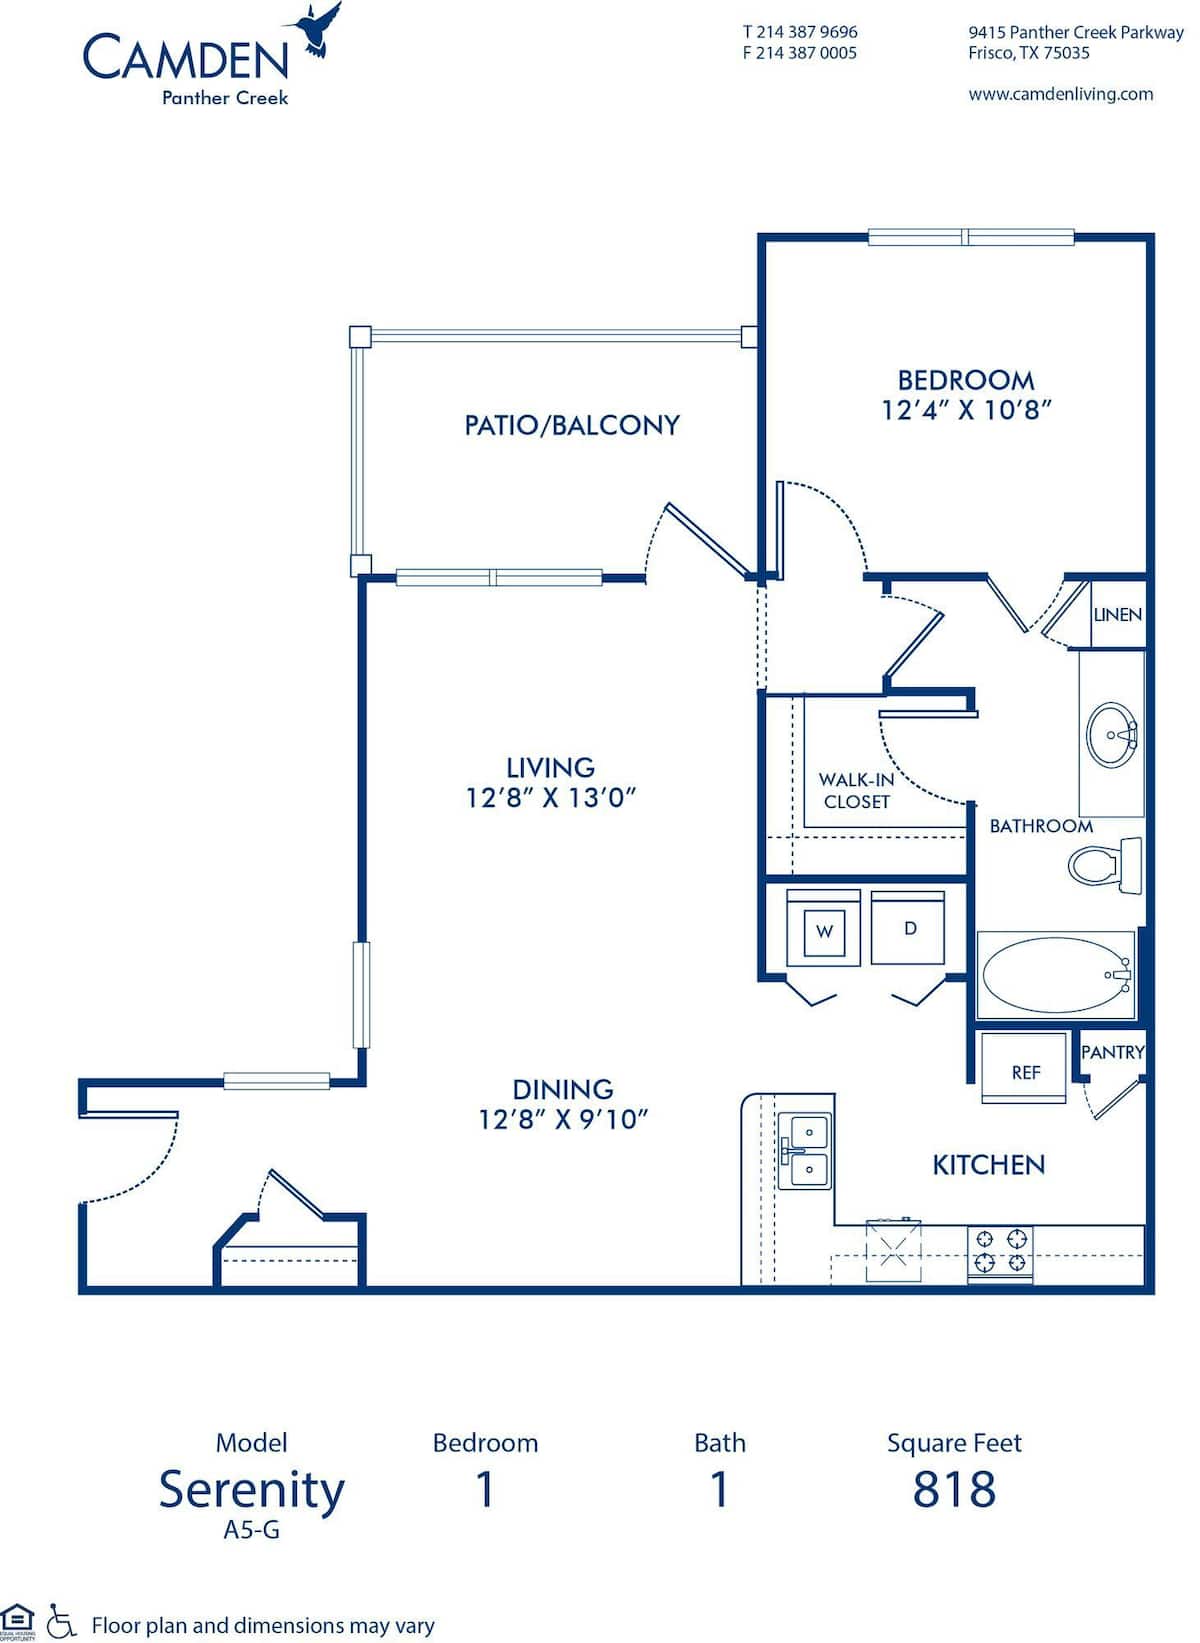 Floorplan diagram for Serenity, showing 1 bedroom